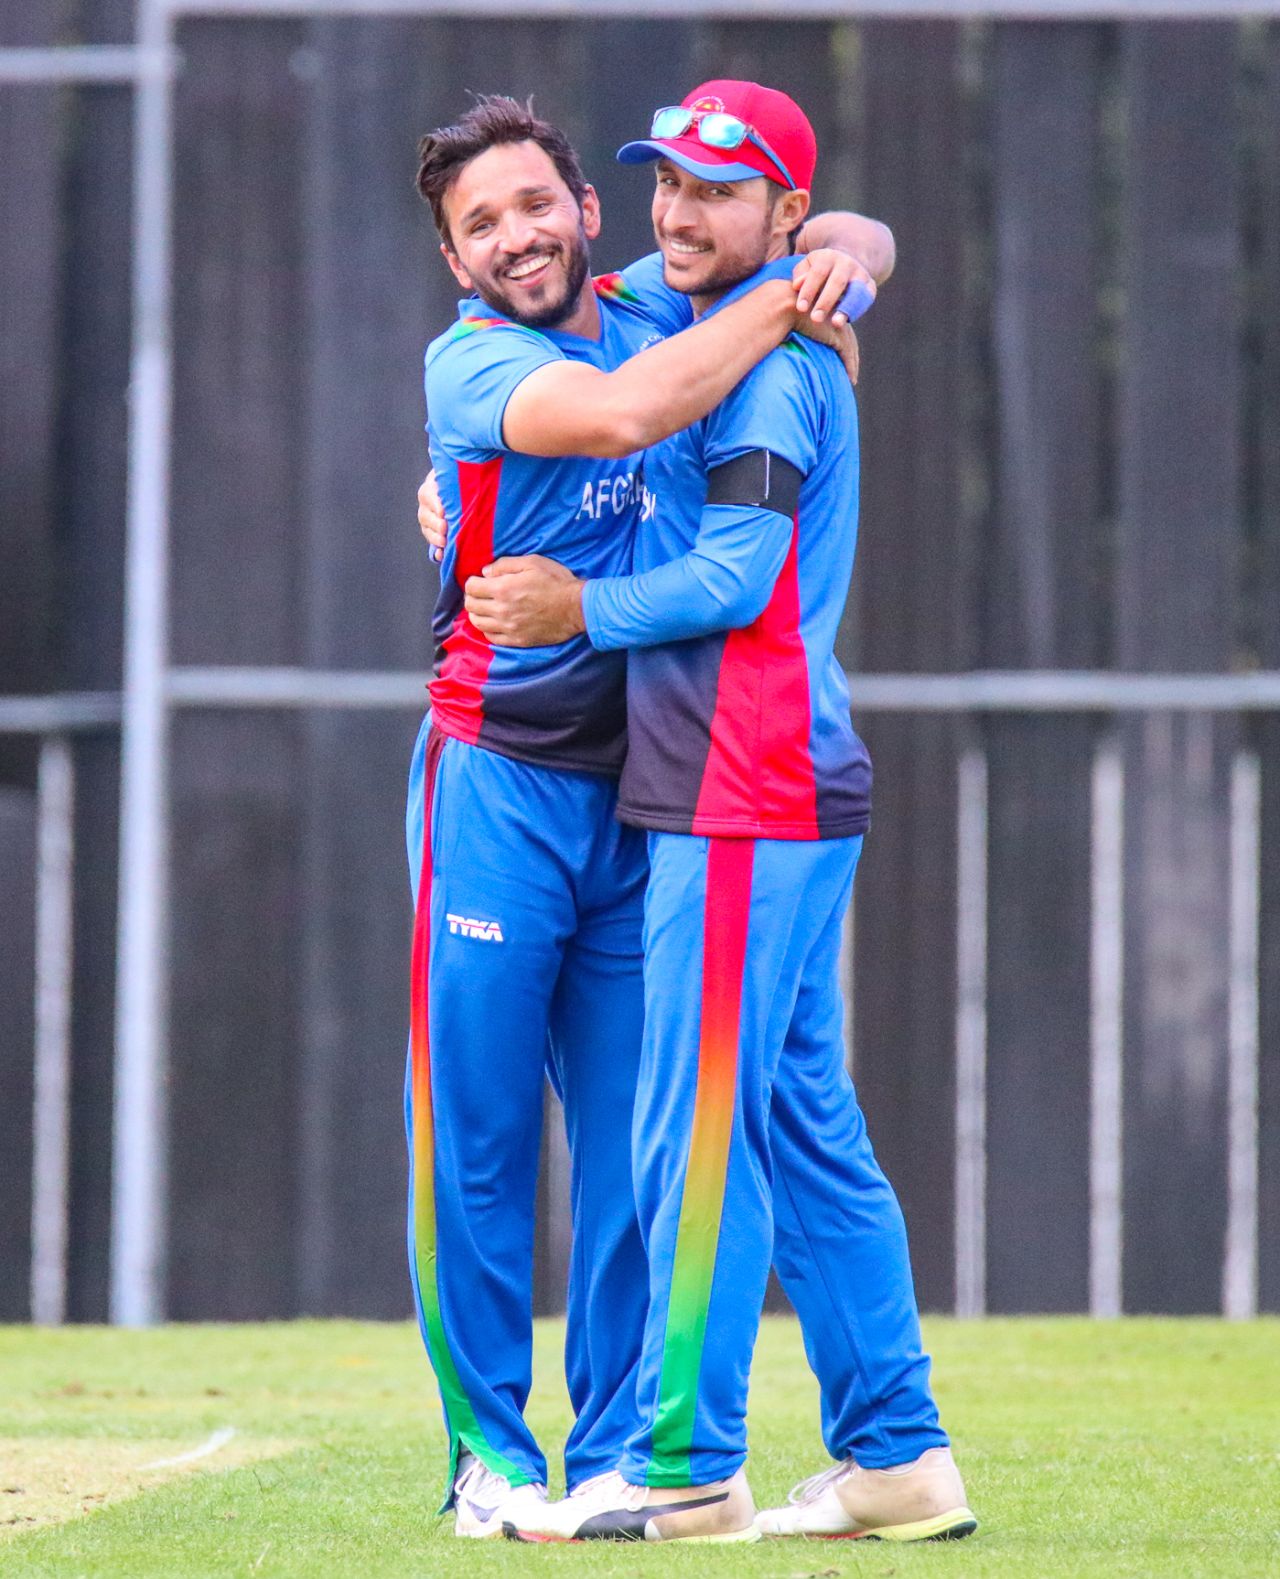 Afghanistan captain Gulbadin Naib celebrates with Rahmat Shah after taking a wicket, Scotland v Afghanistan, 2nd ODI, Edinburgh, May 10, 2019